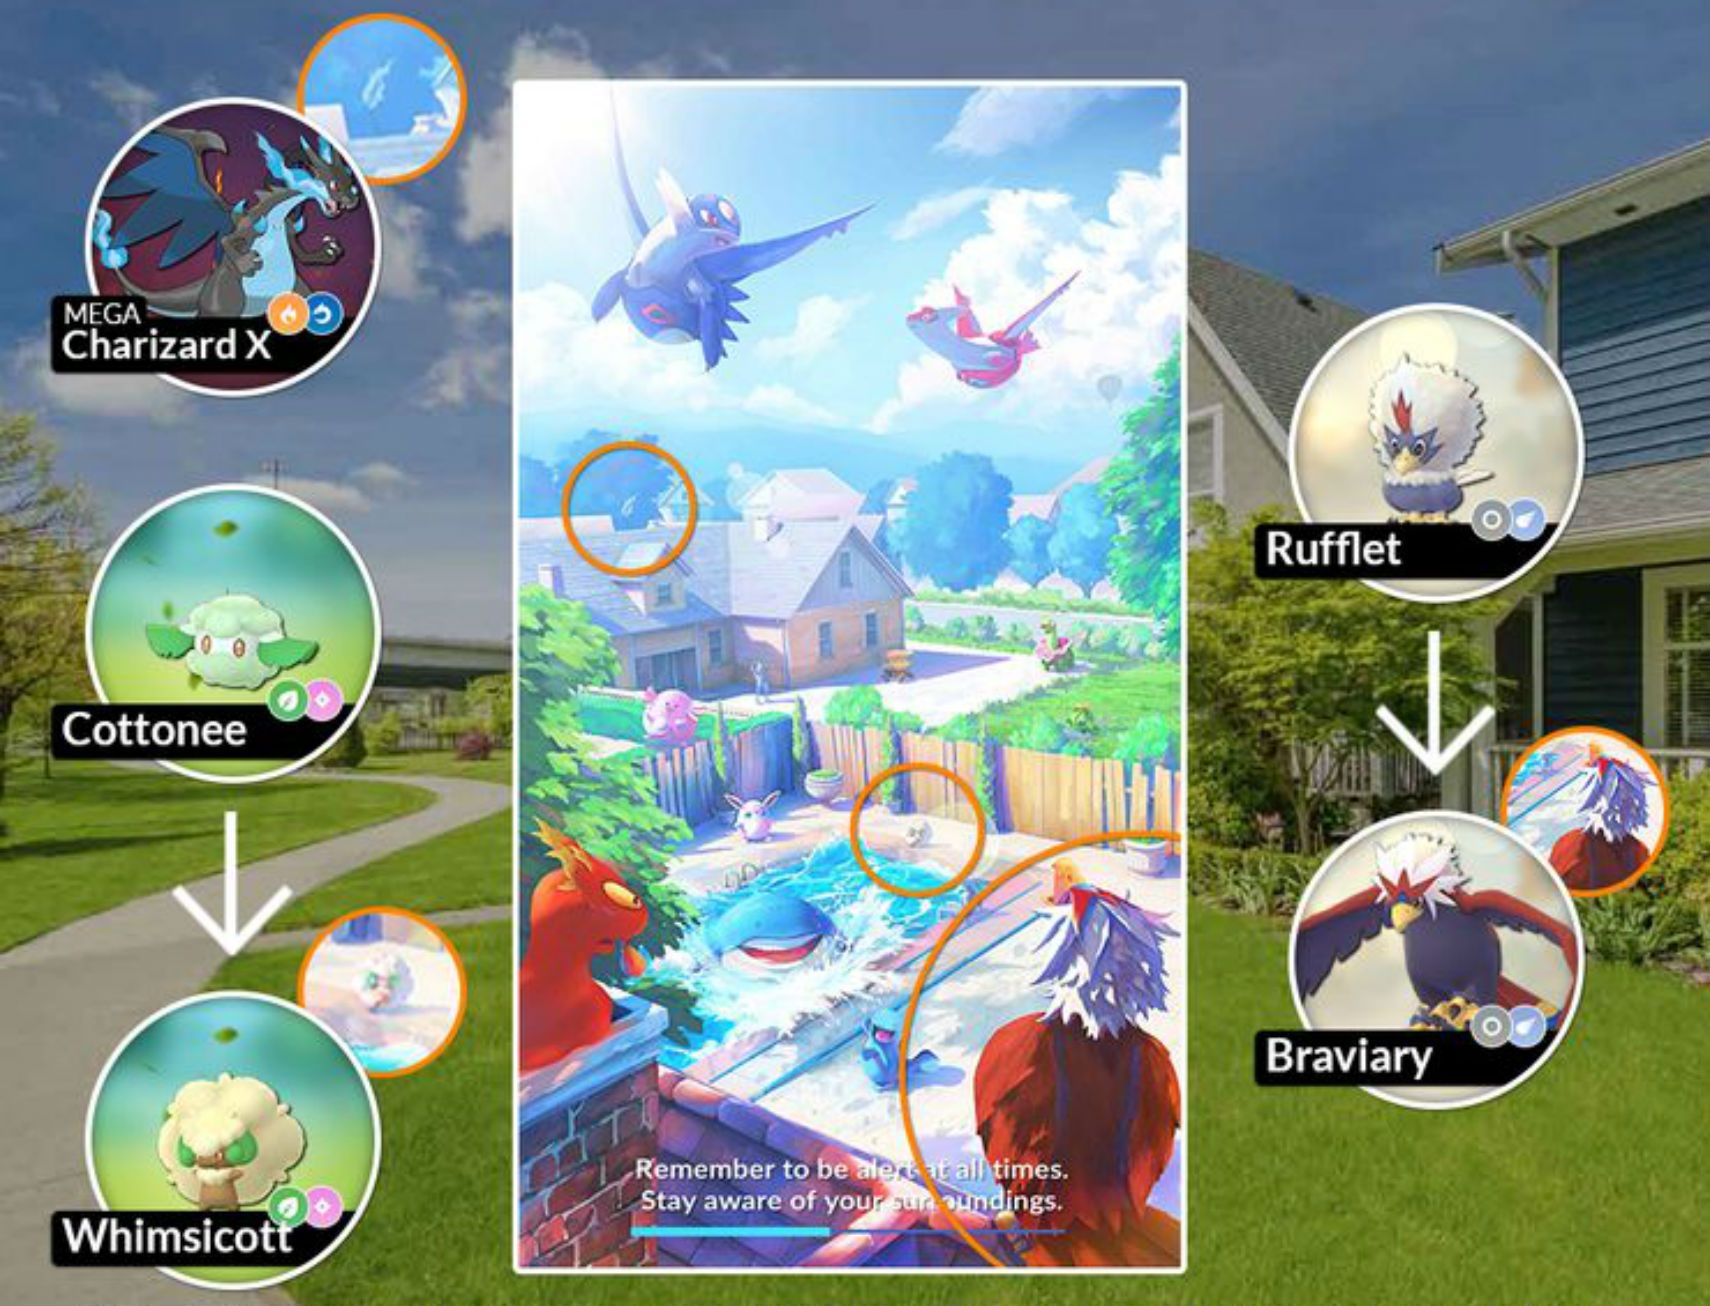 New Loading Screen Reveals New Pokémon Coming To Pokémon GO